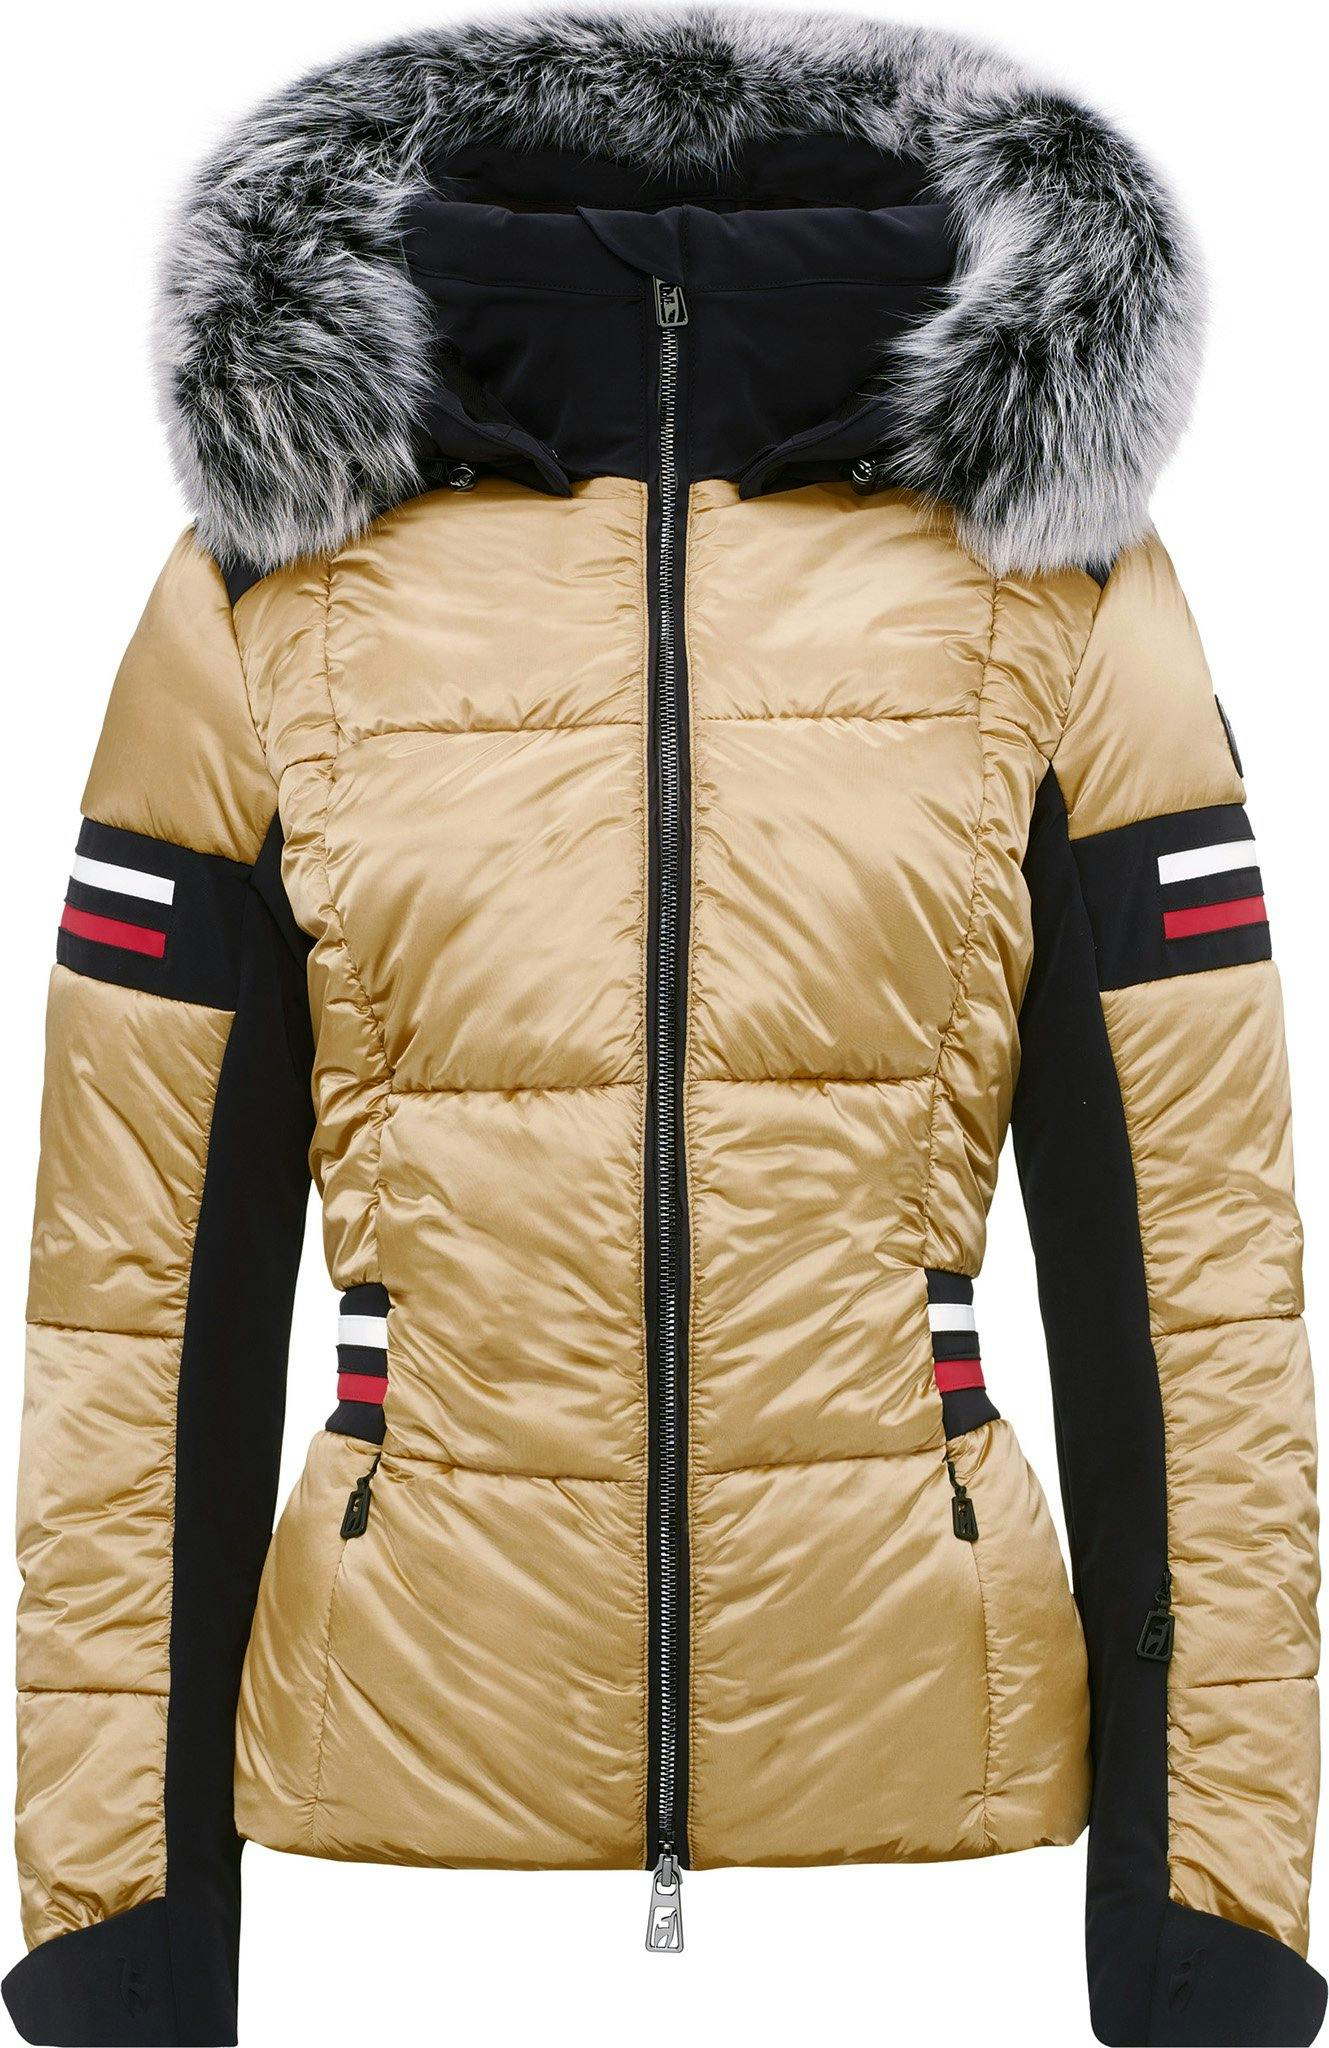 Product gallery image number 7 for product Nana Splendid Ski Jacket - Women's